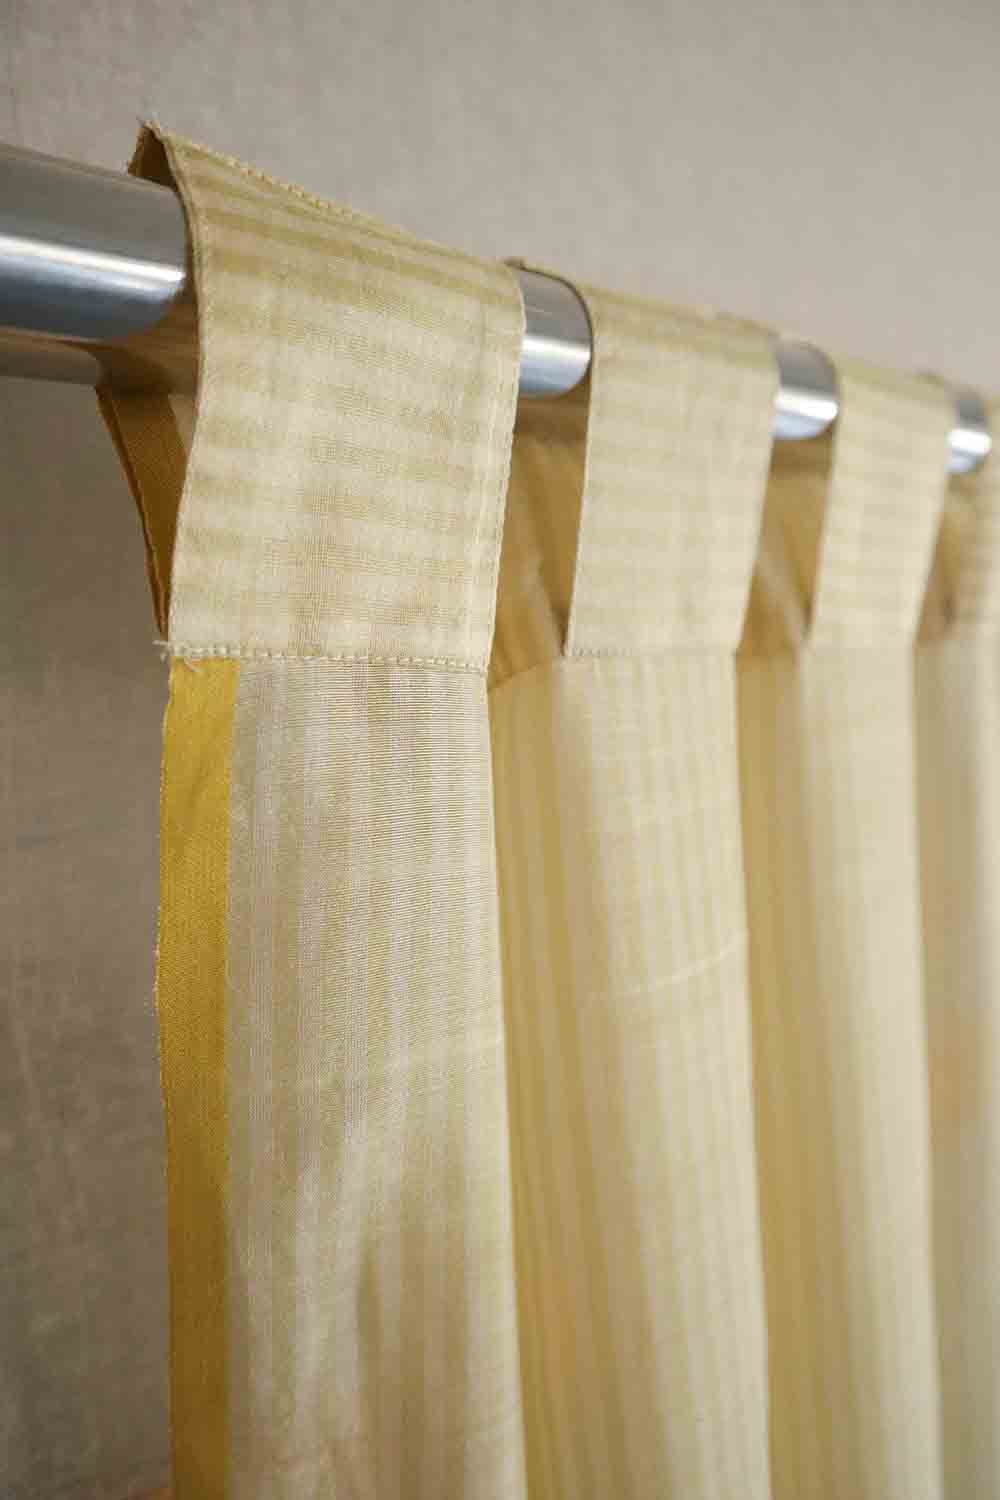 Handwoven Chanderi Stripe Curtain - 9ft / 108"